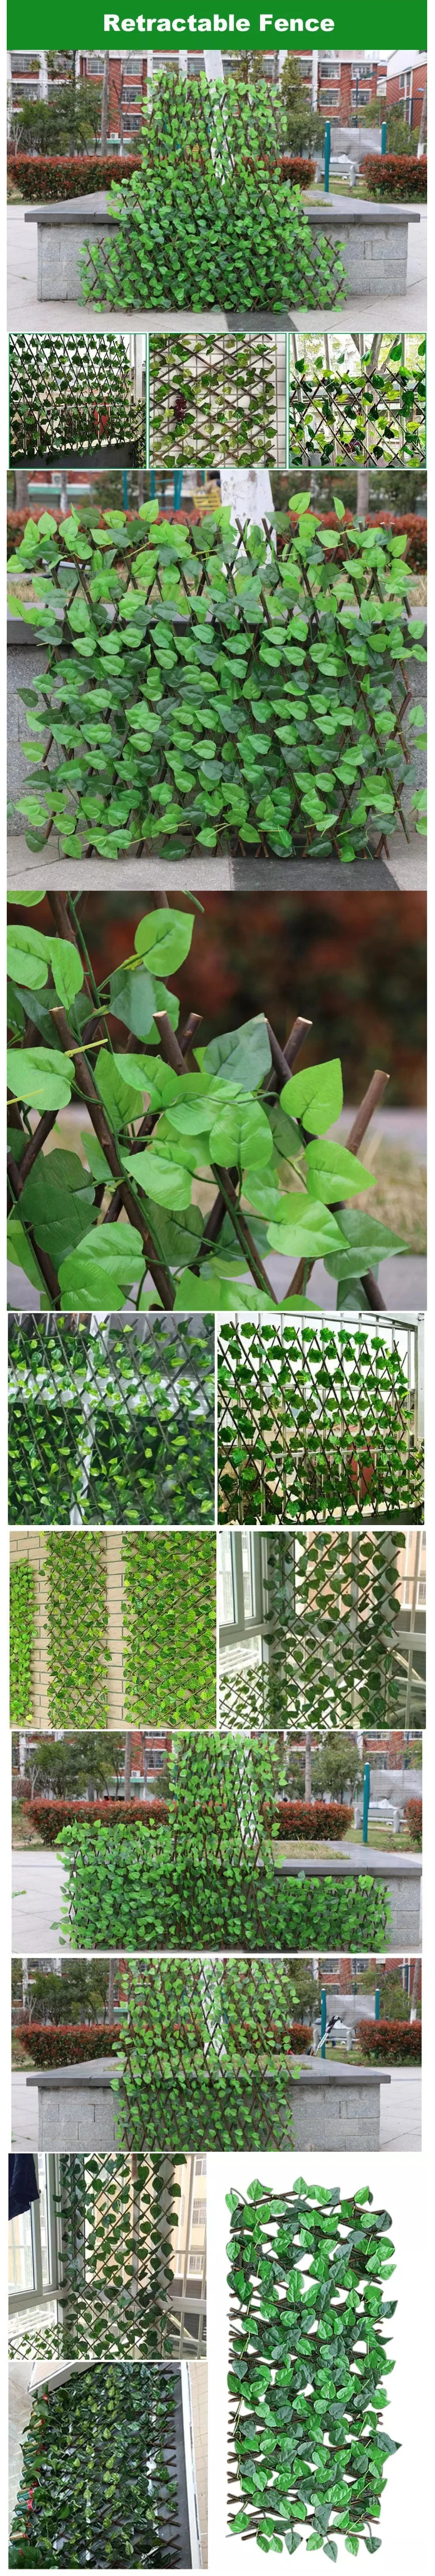 Expanding Trellis Fence Retractable Fence Artificial Garden Plant Fence